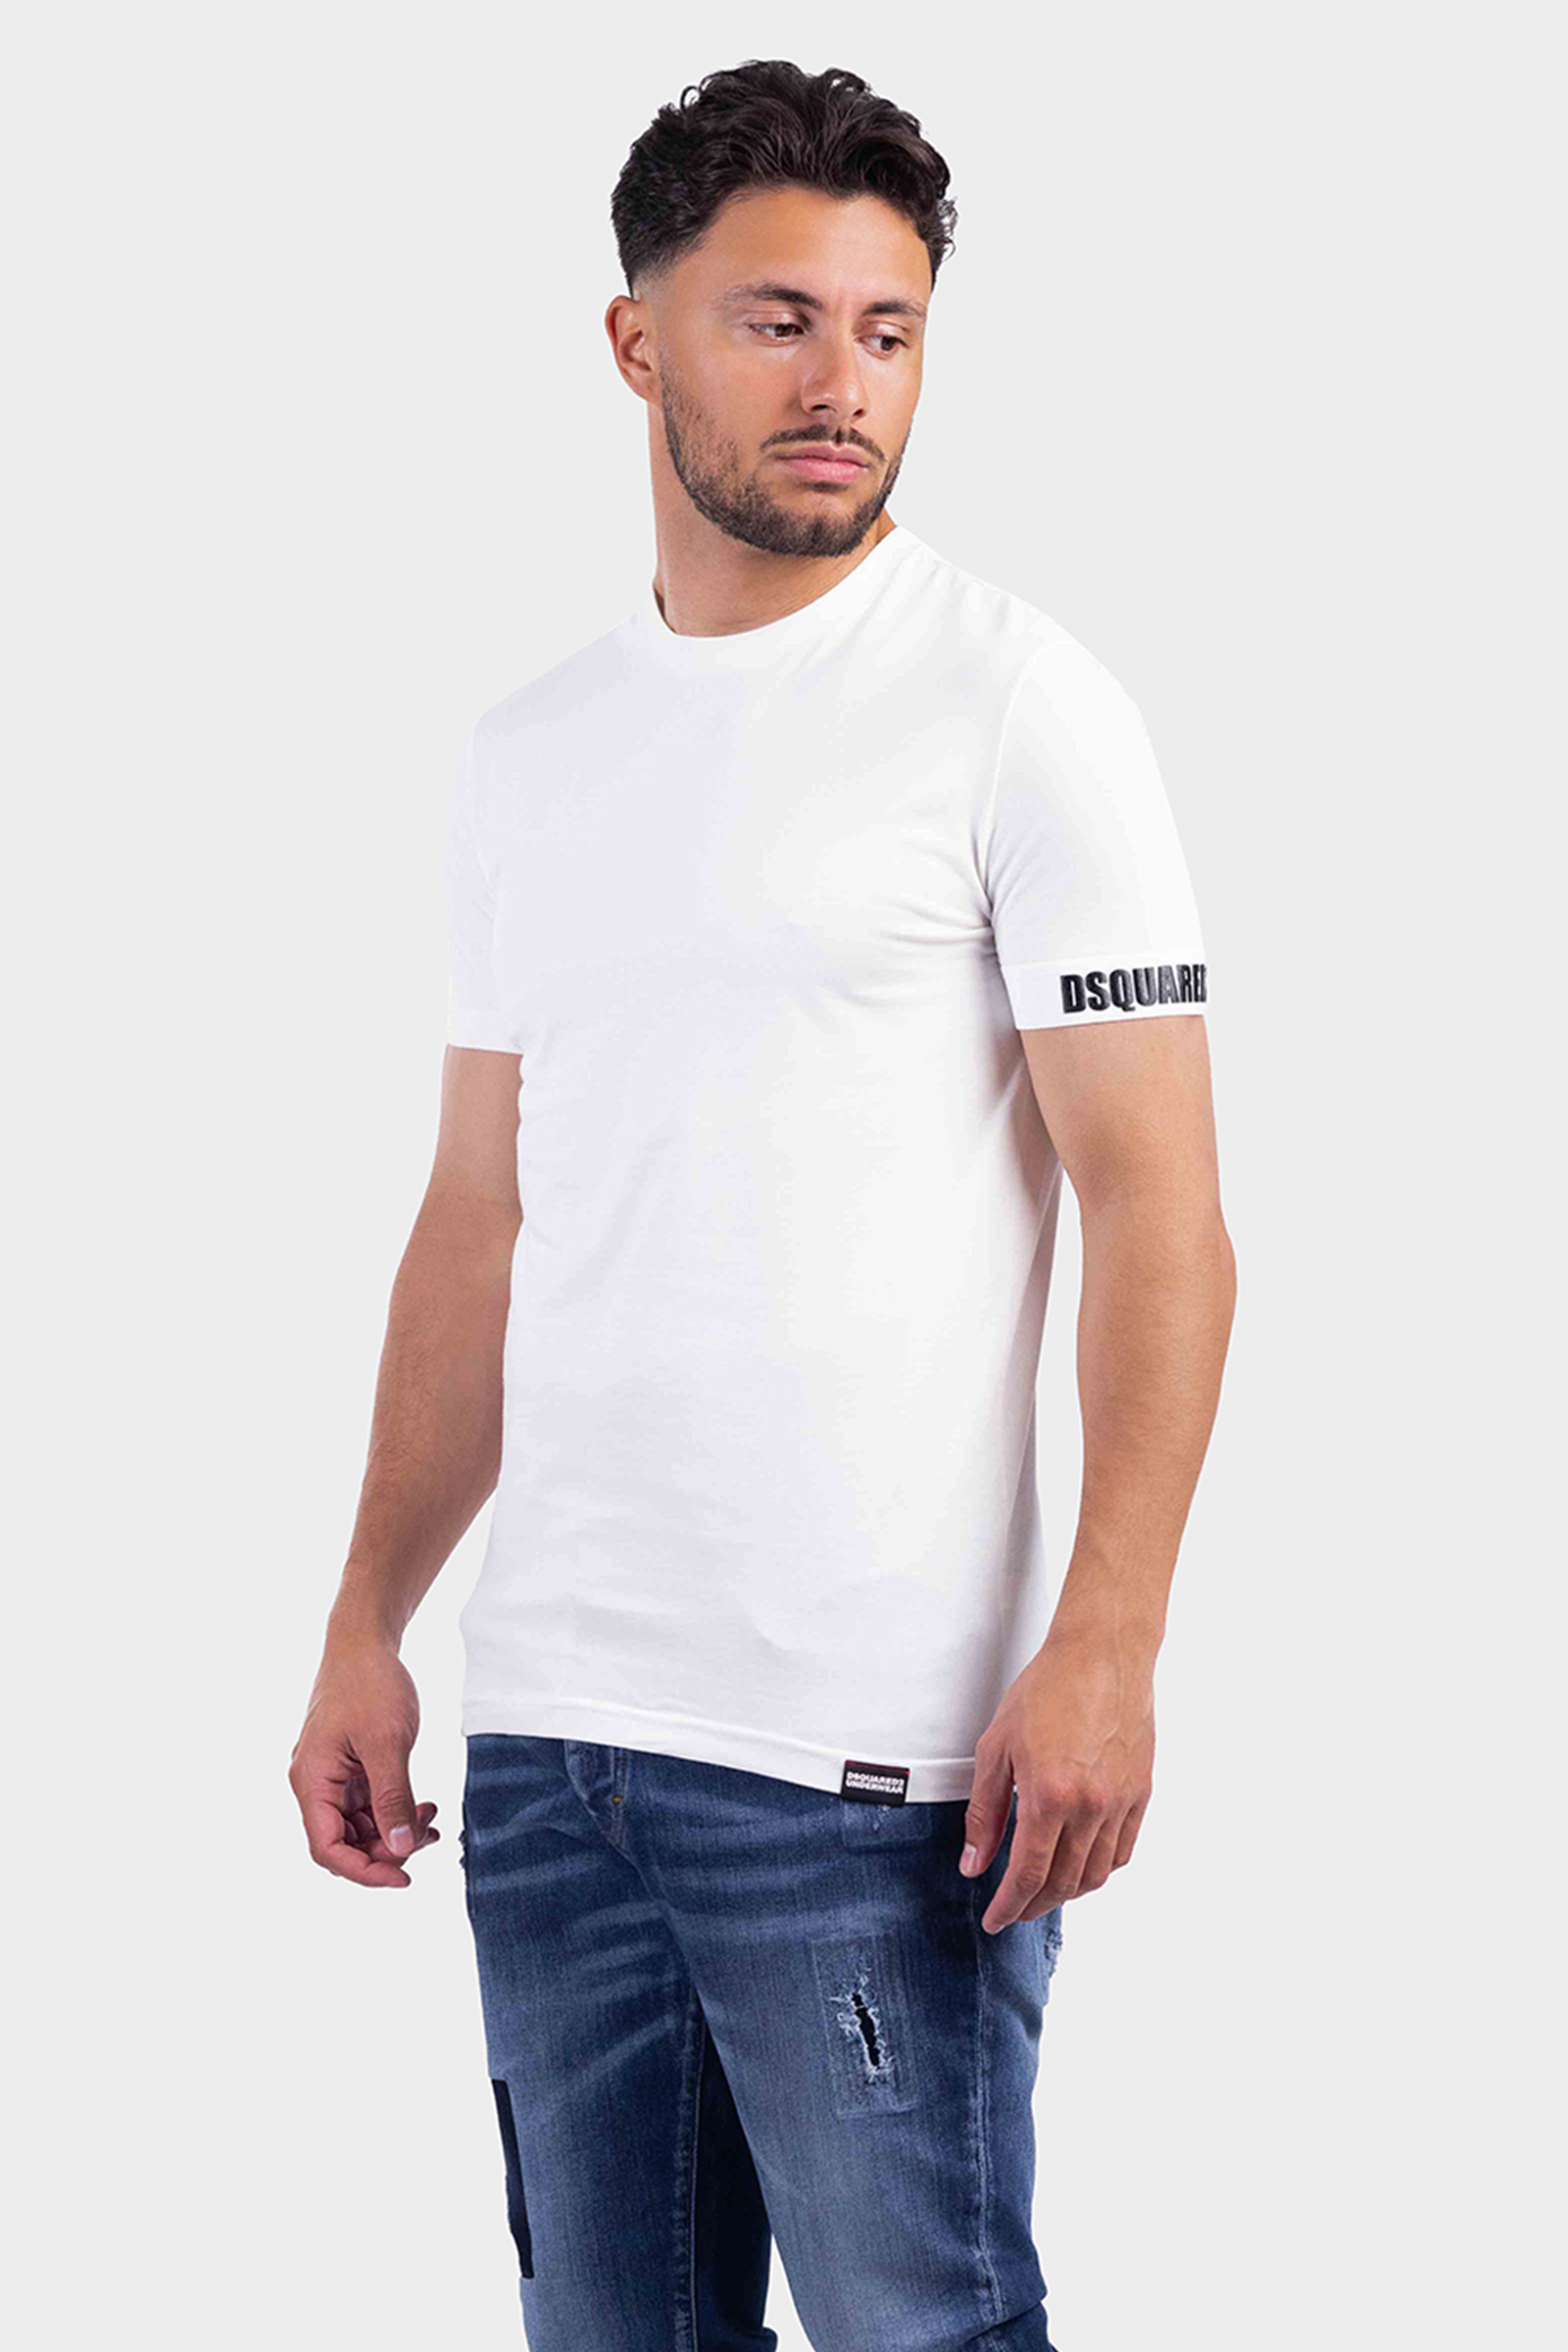 Melodramatisch Bek ginder Dsquared2 Tape Logo T-shirt Heren Wit Heren shoppen? | Soccerfanshop BE